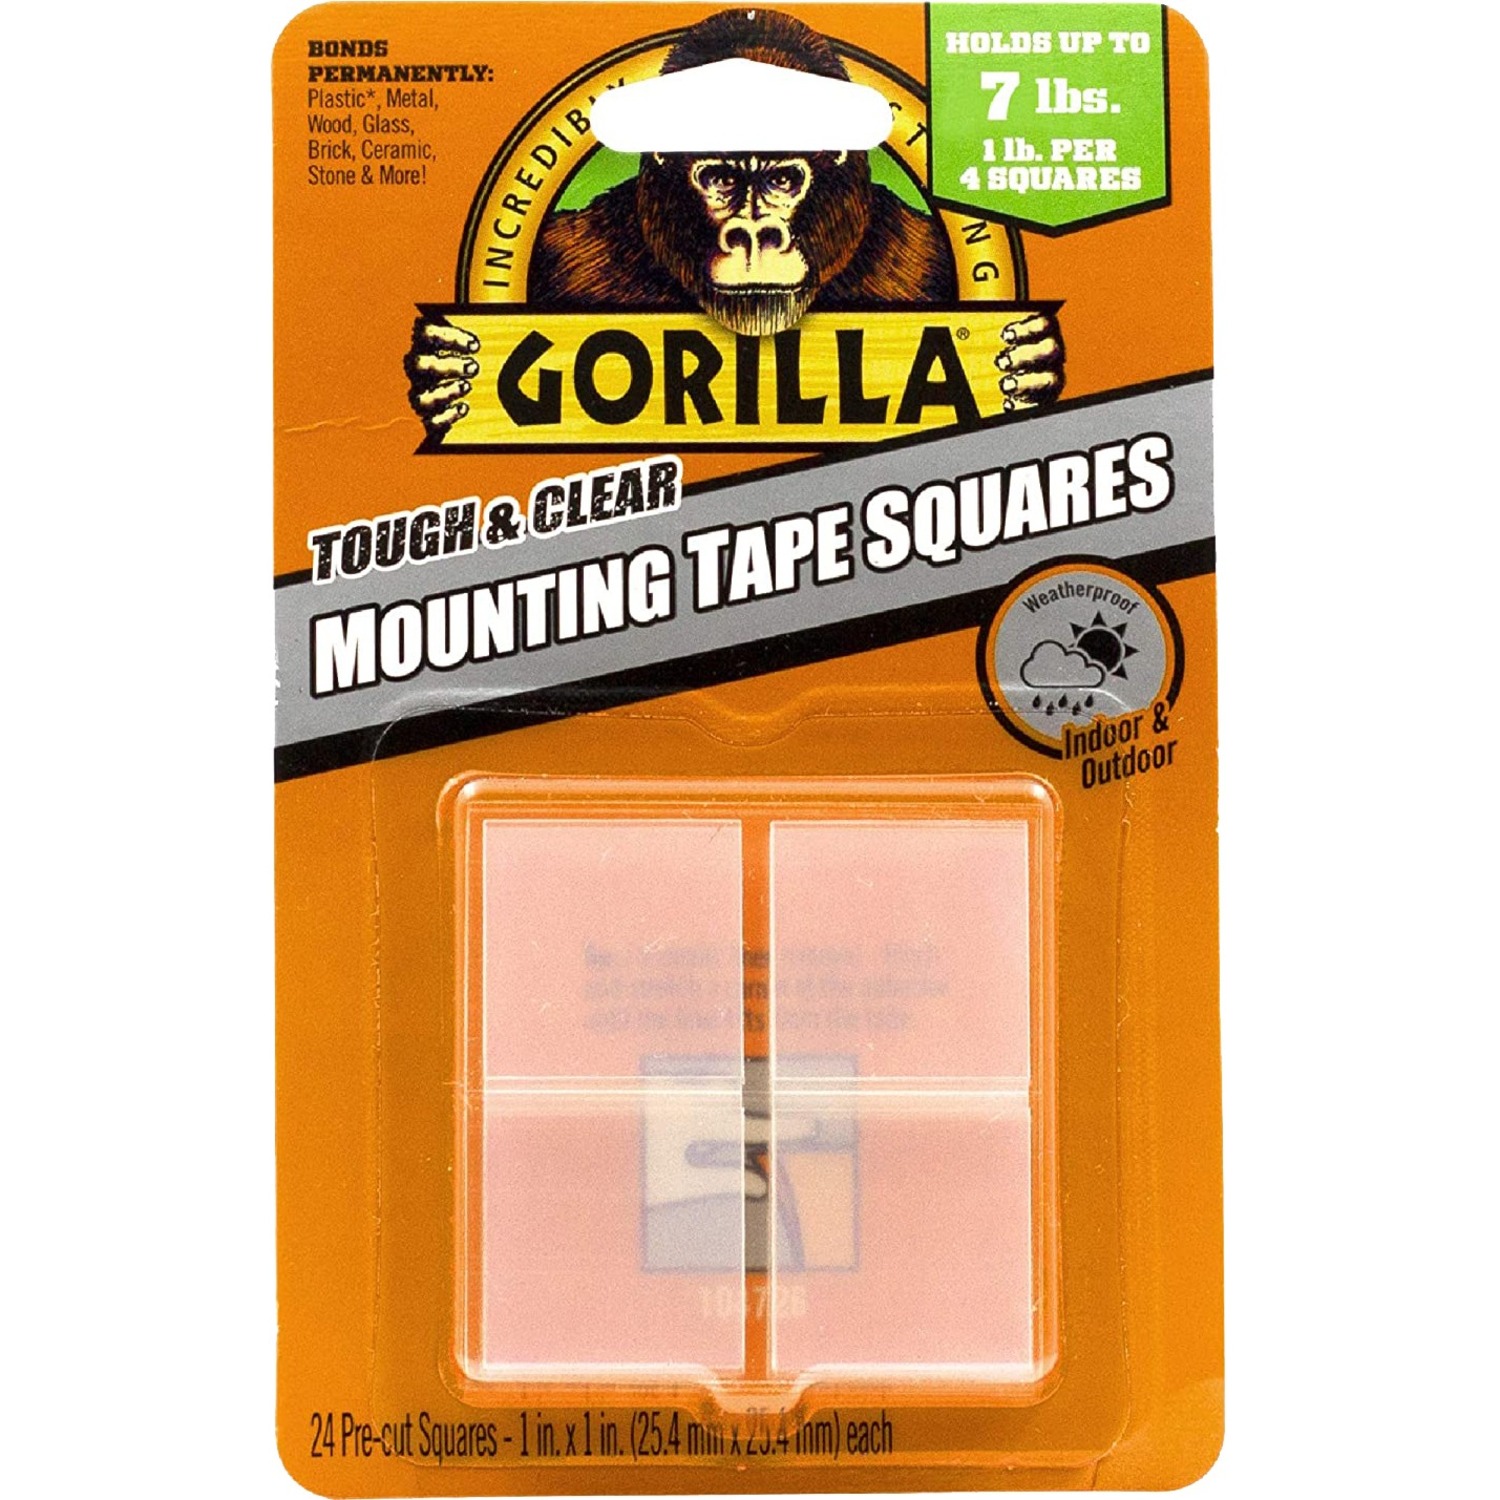 Gorilla Mounting Variety Pack, 1 unit - Ralphs